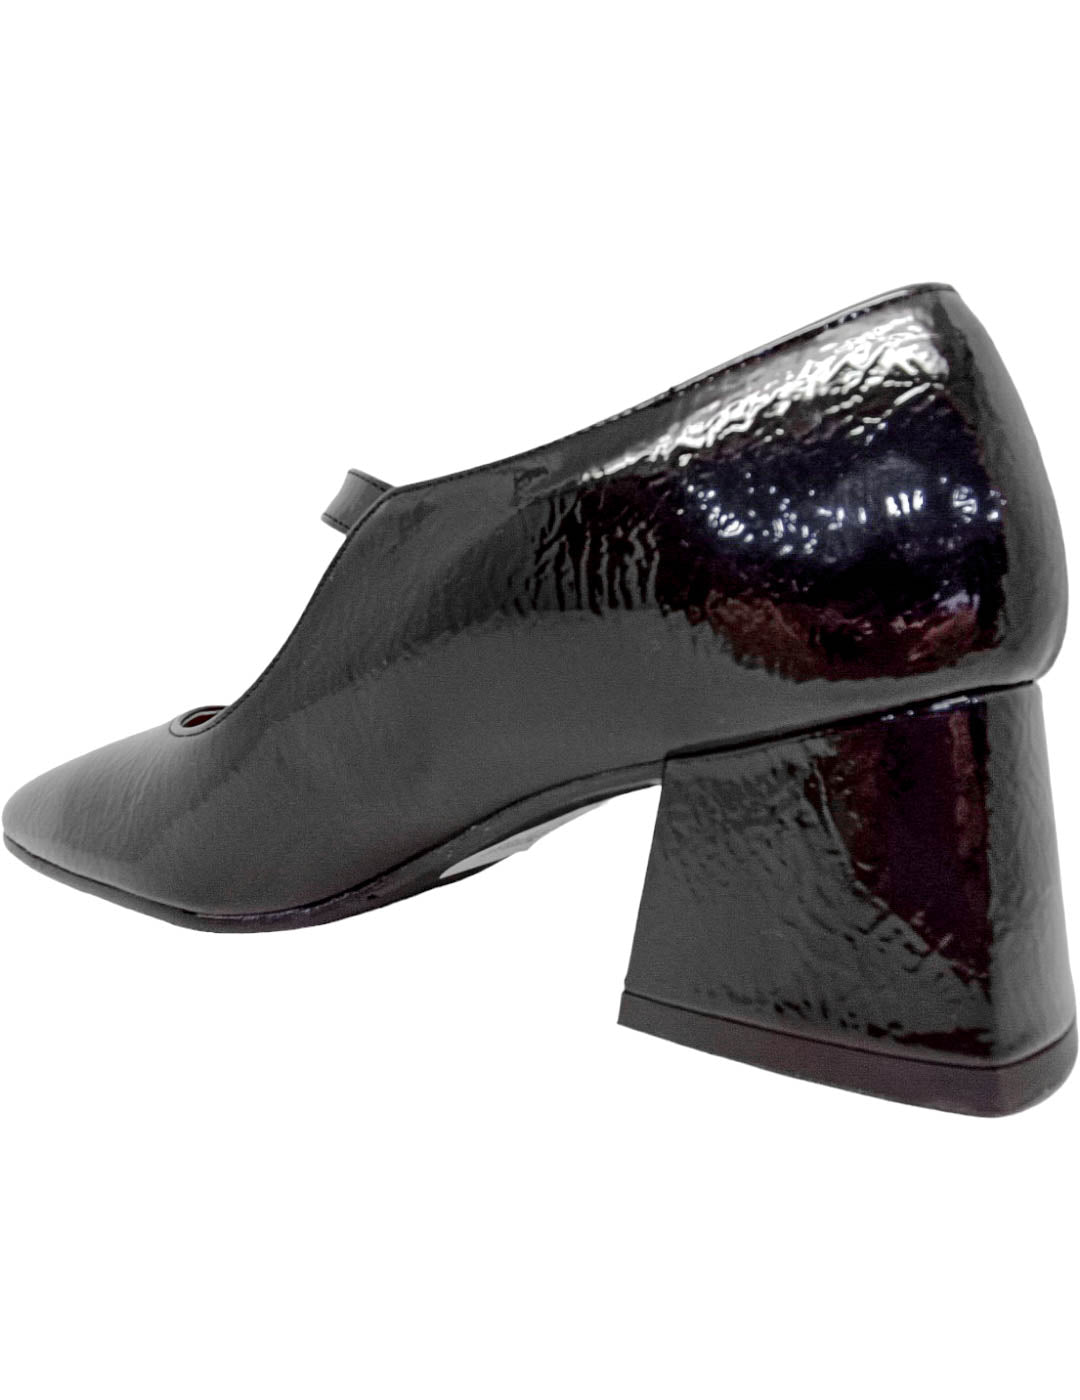 Zapato merceditas tacón 1500 divine negro